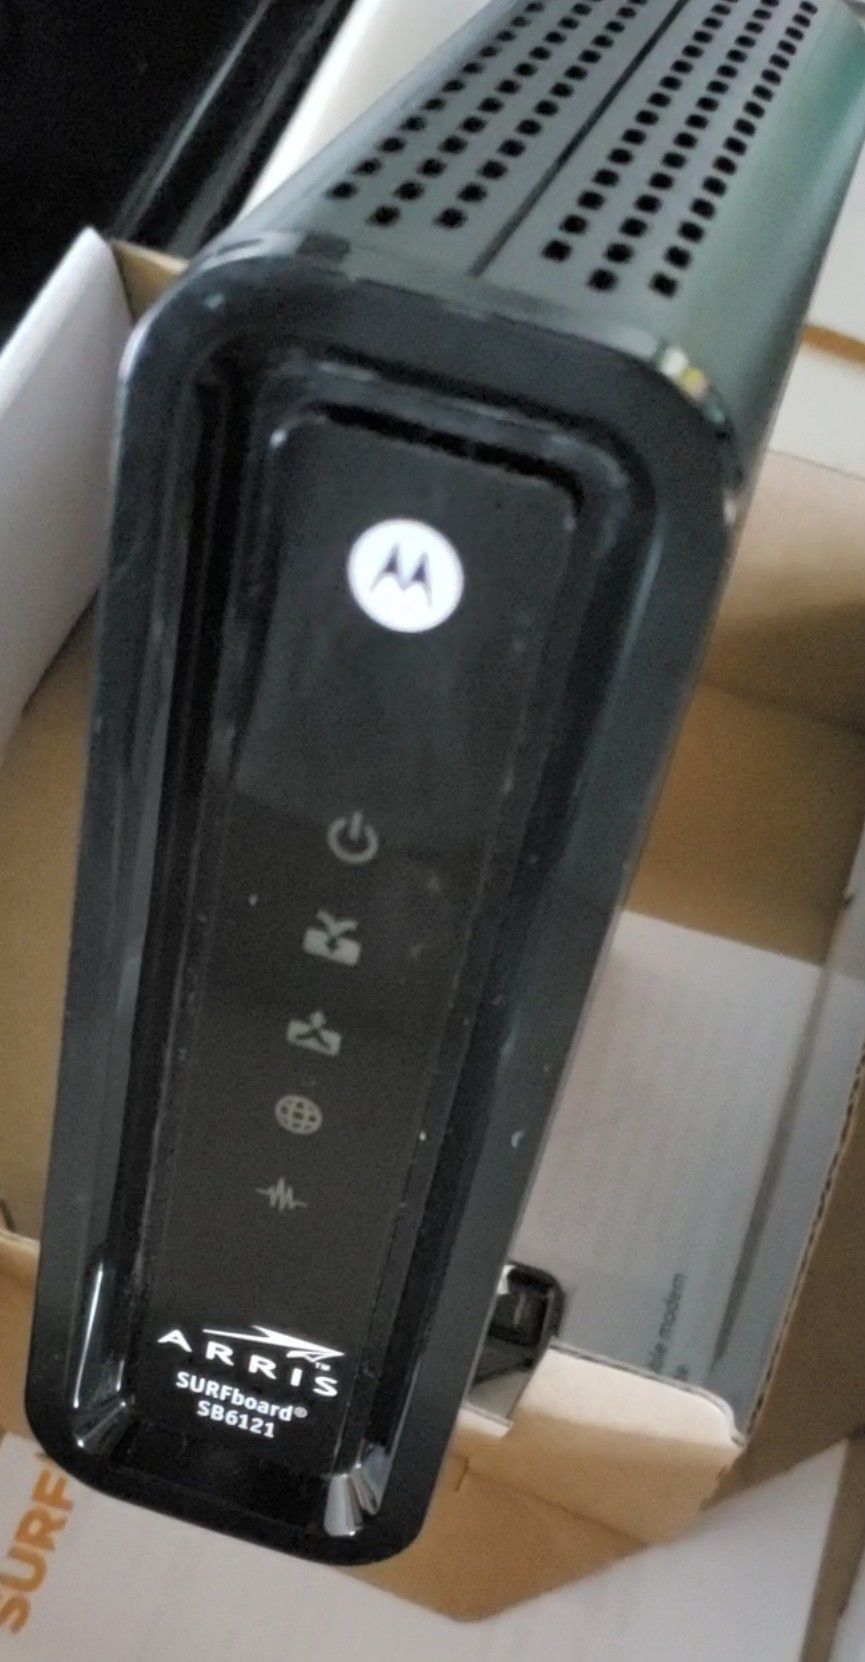 Arris/Motorola SB6121 Cable Modem For Xfinity/Comcast